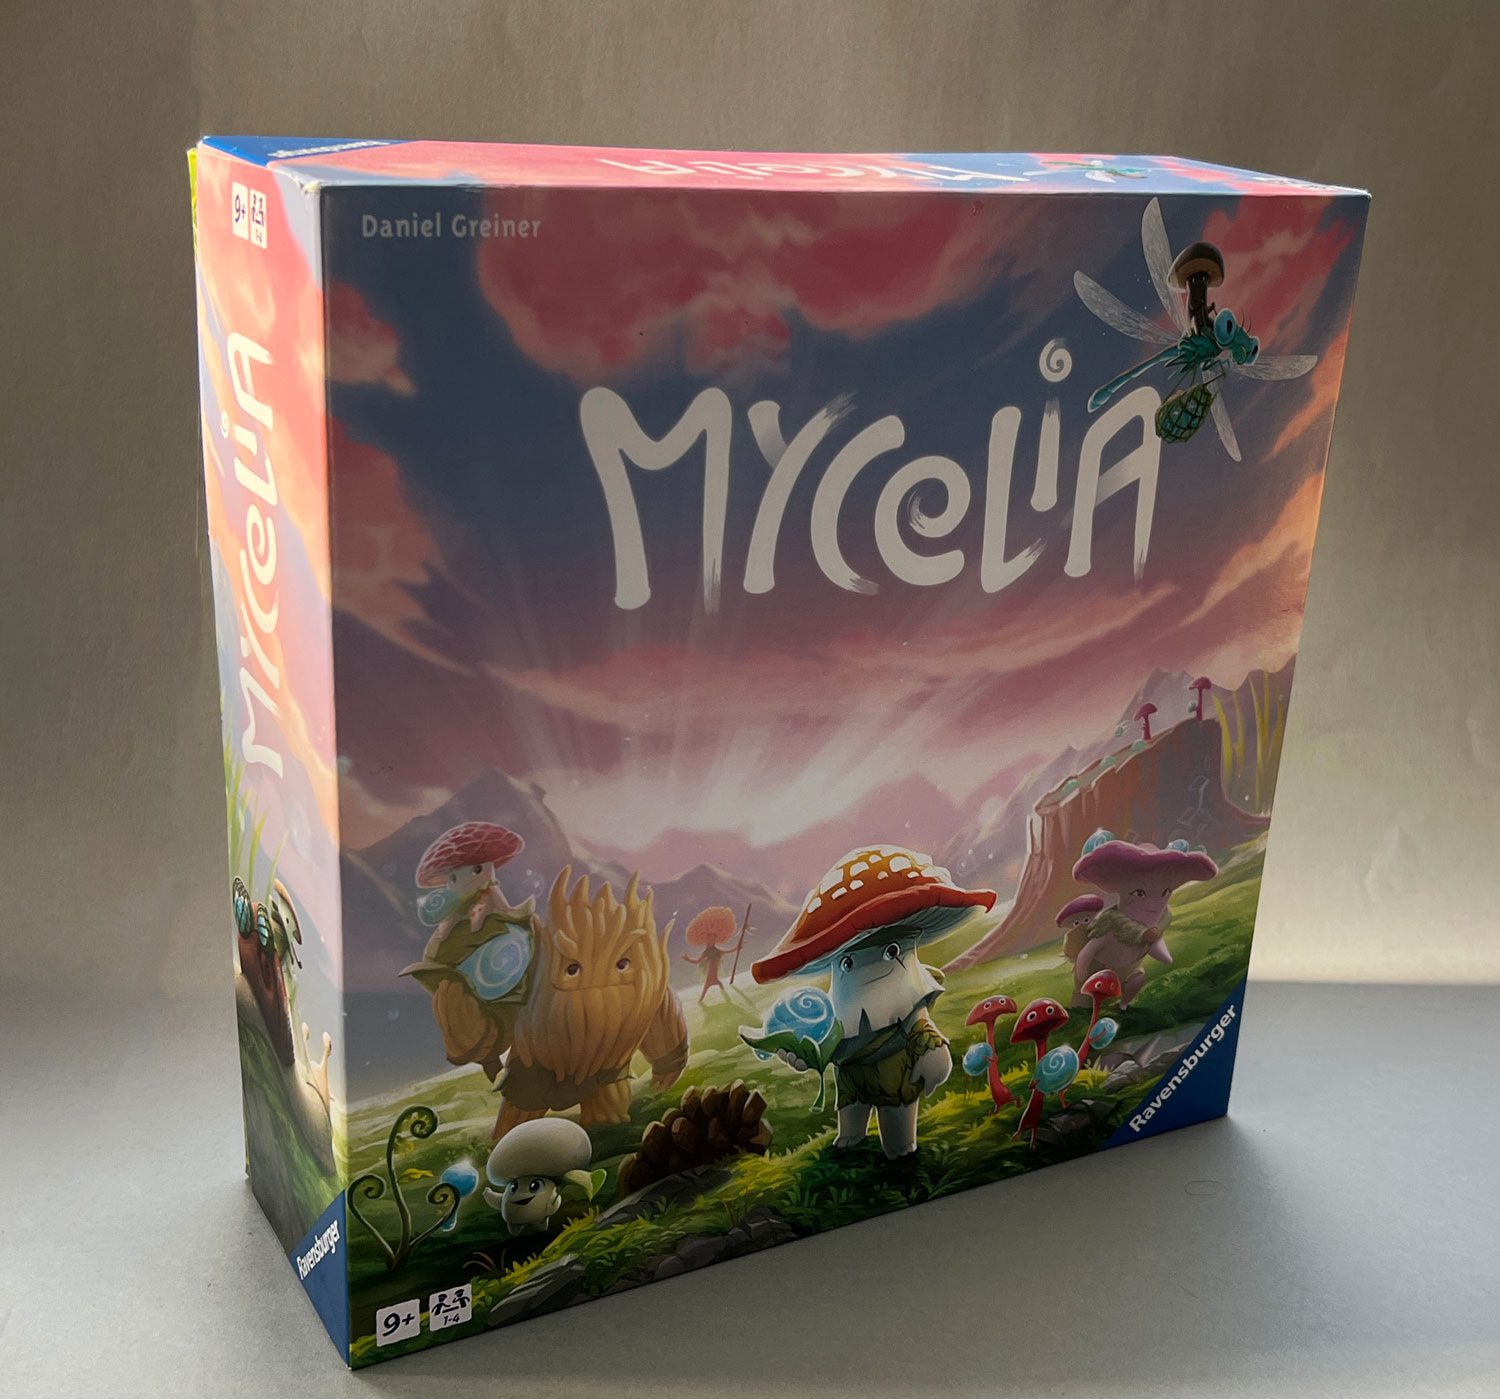 Mycelia: The Box Art